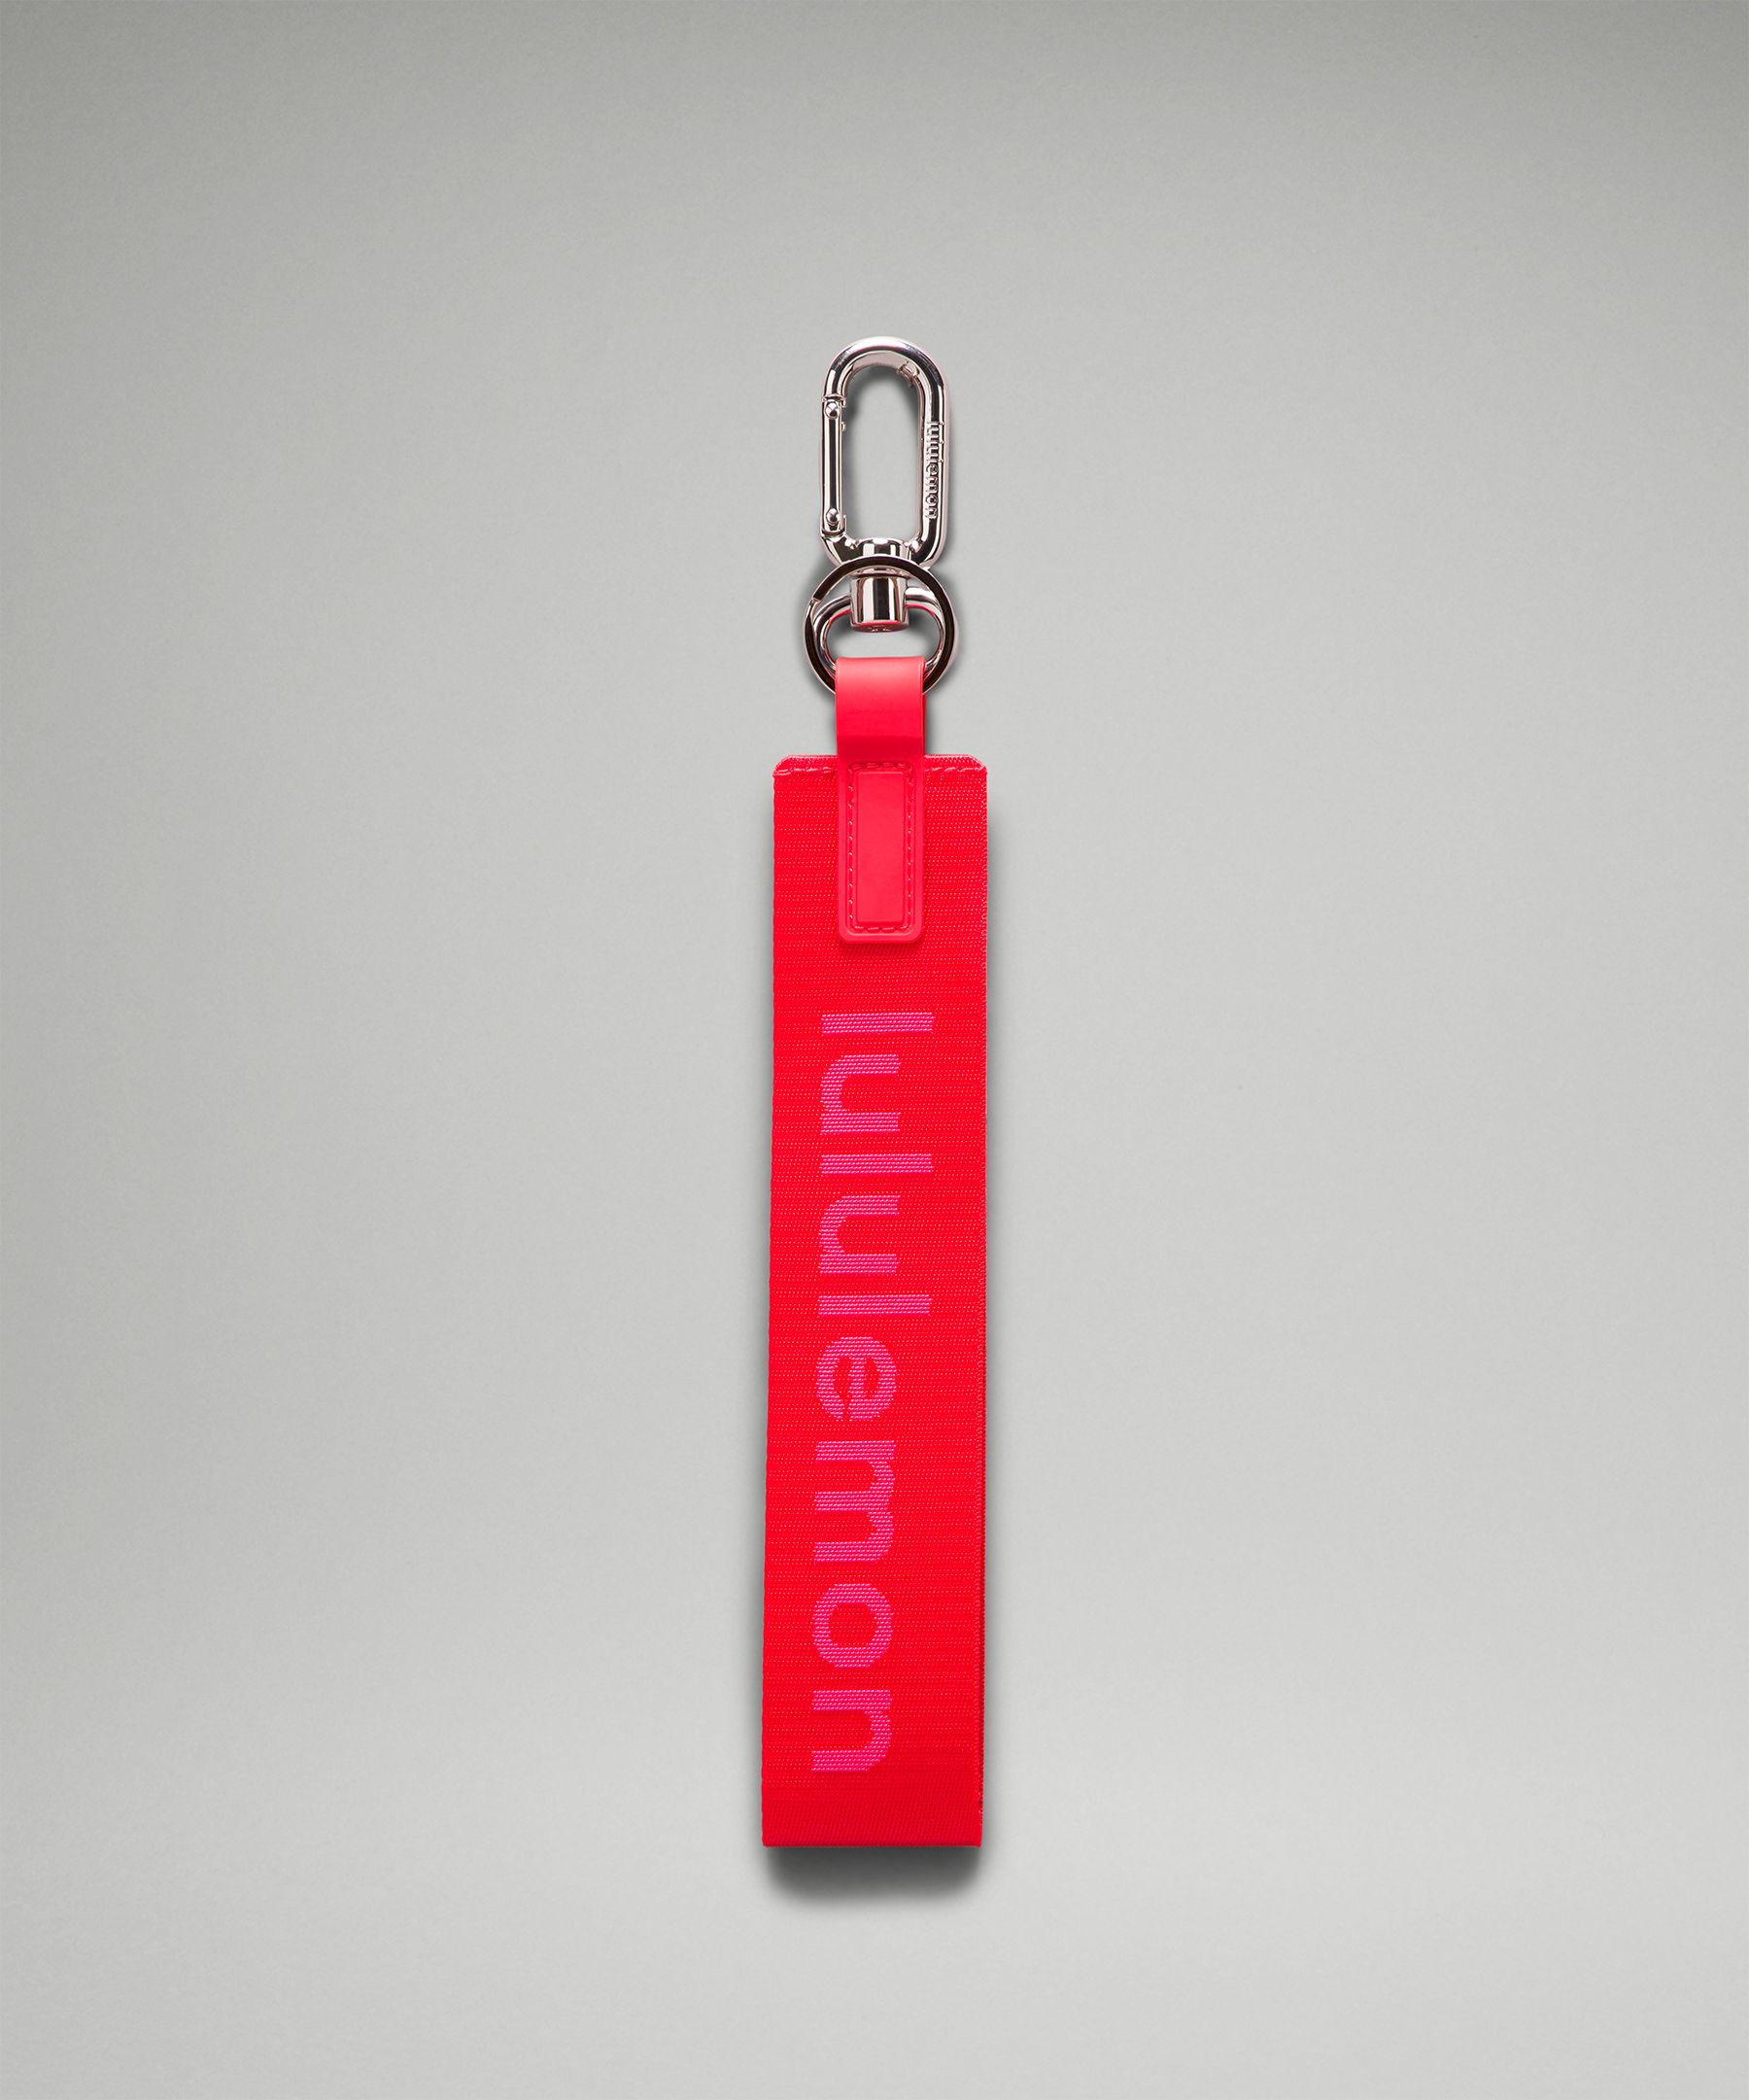 Accessories, Supreme Lanyard Red Nylon Keychain Id Holder